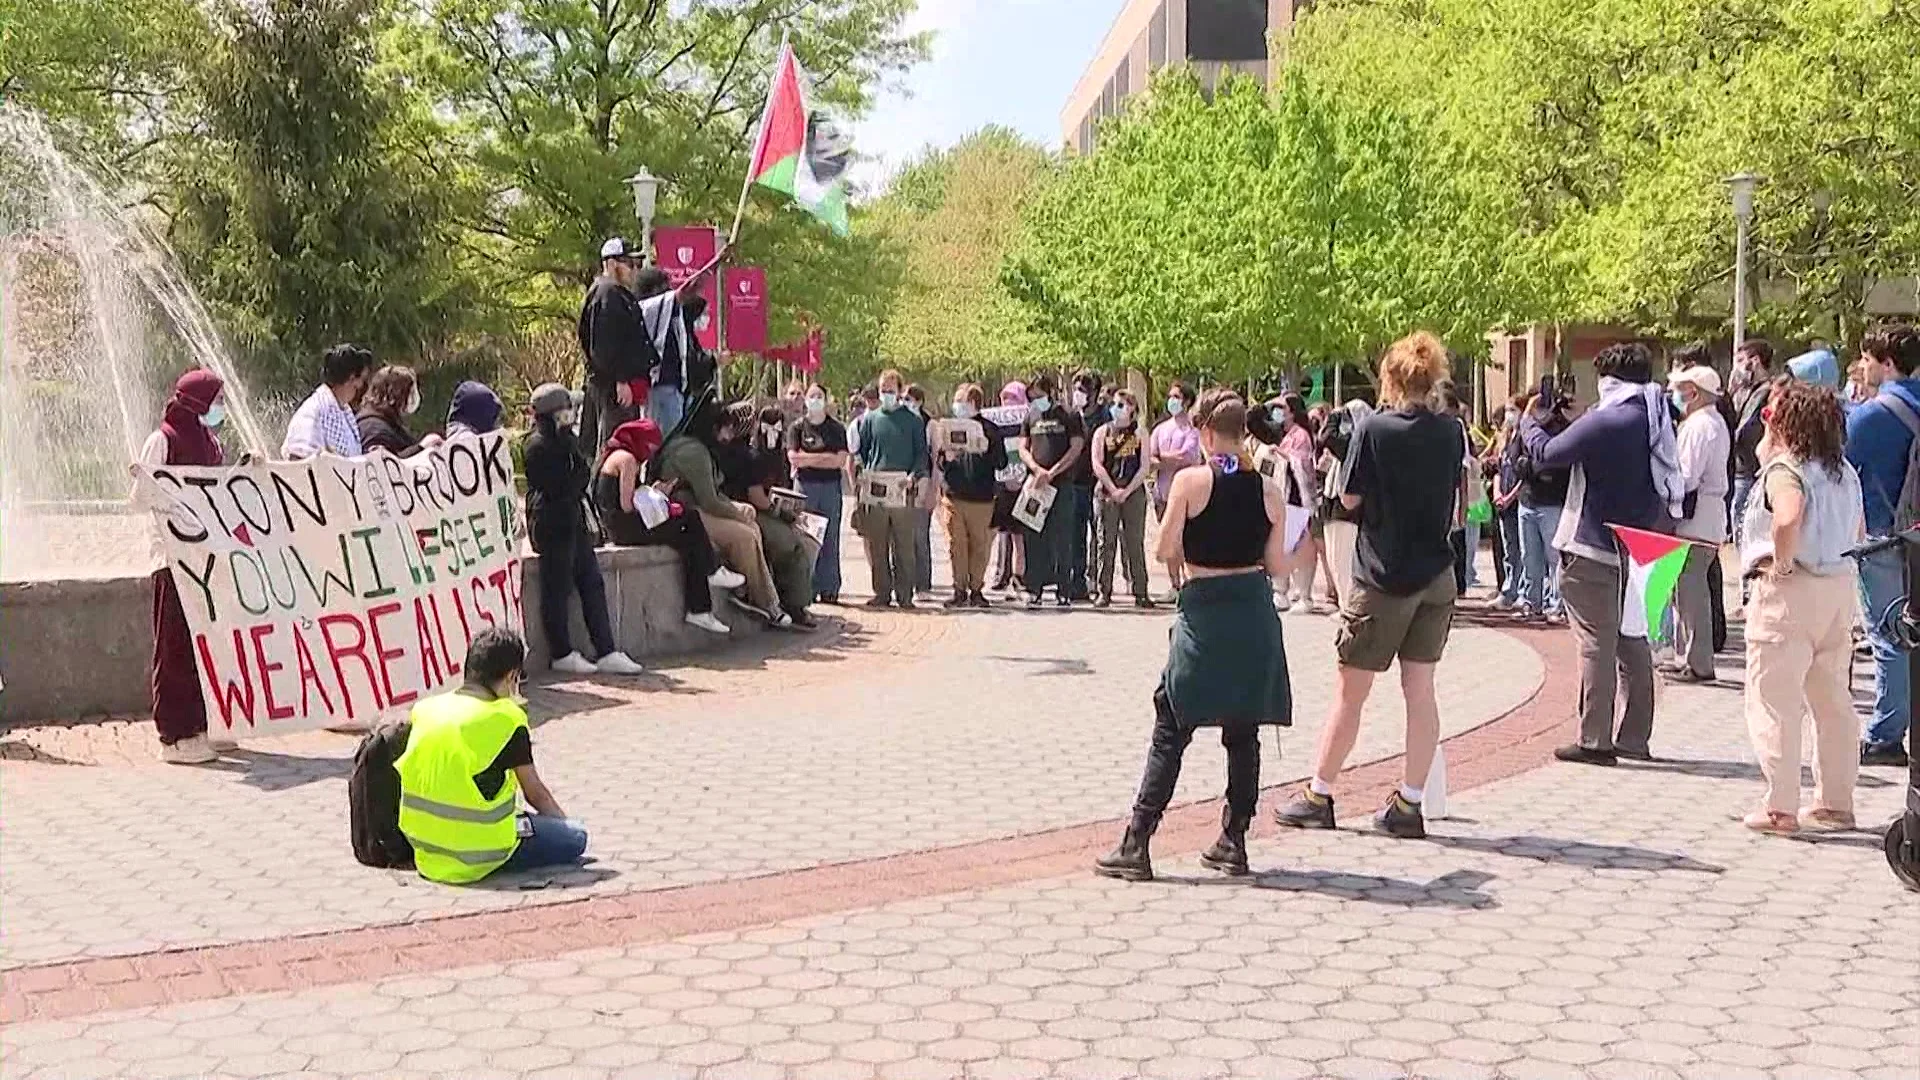 Pro-Palestinian rally takes place at Stony Brook University campus